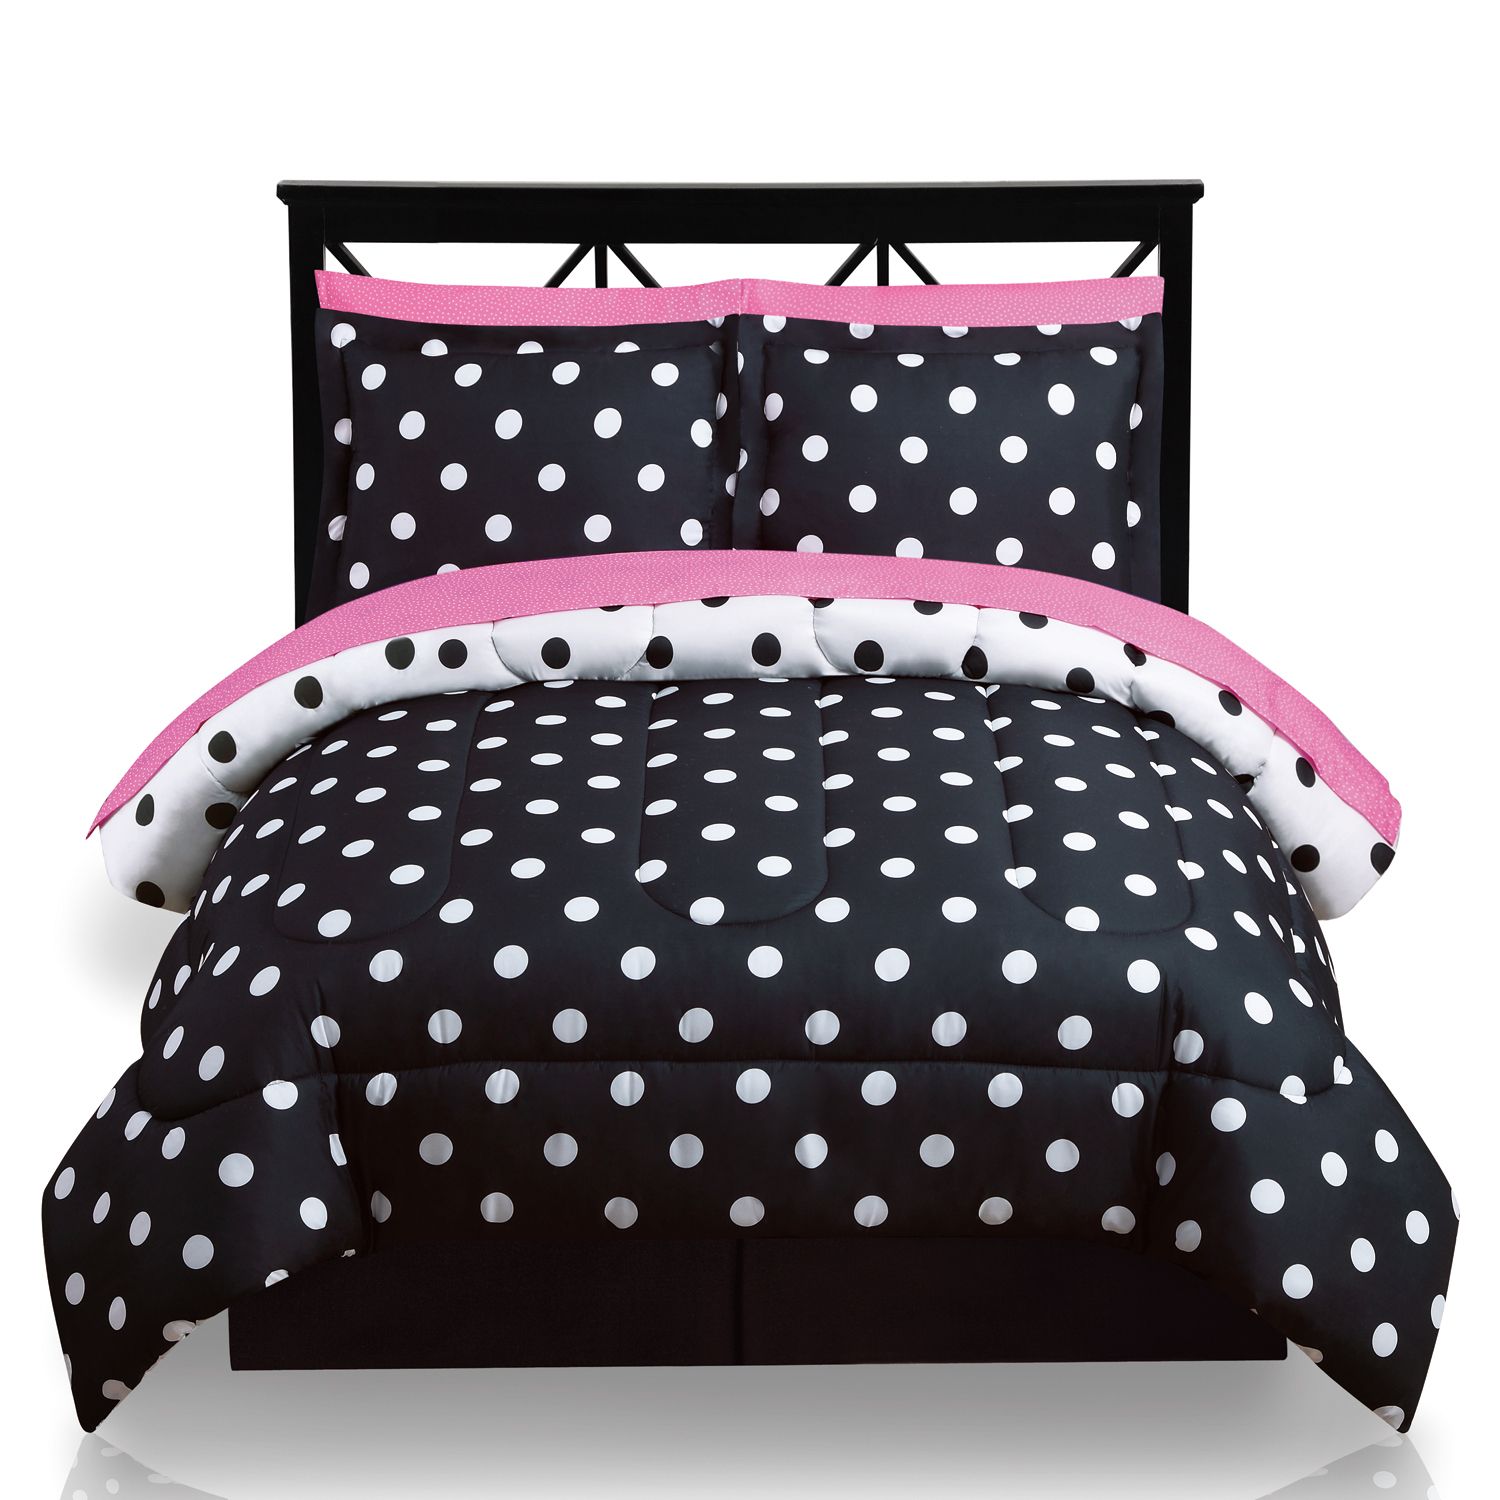 The Big One Polka Dot Bed Set